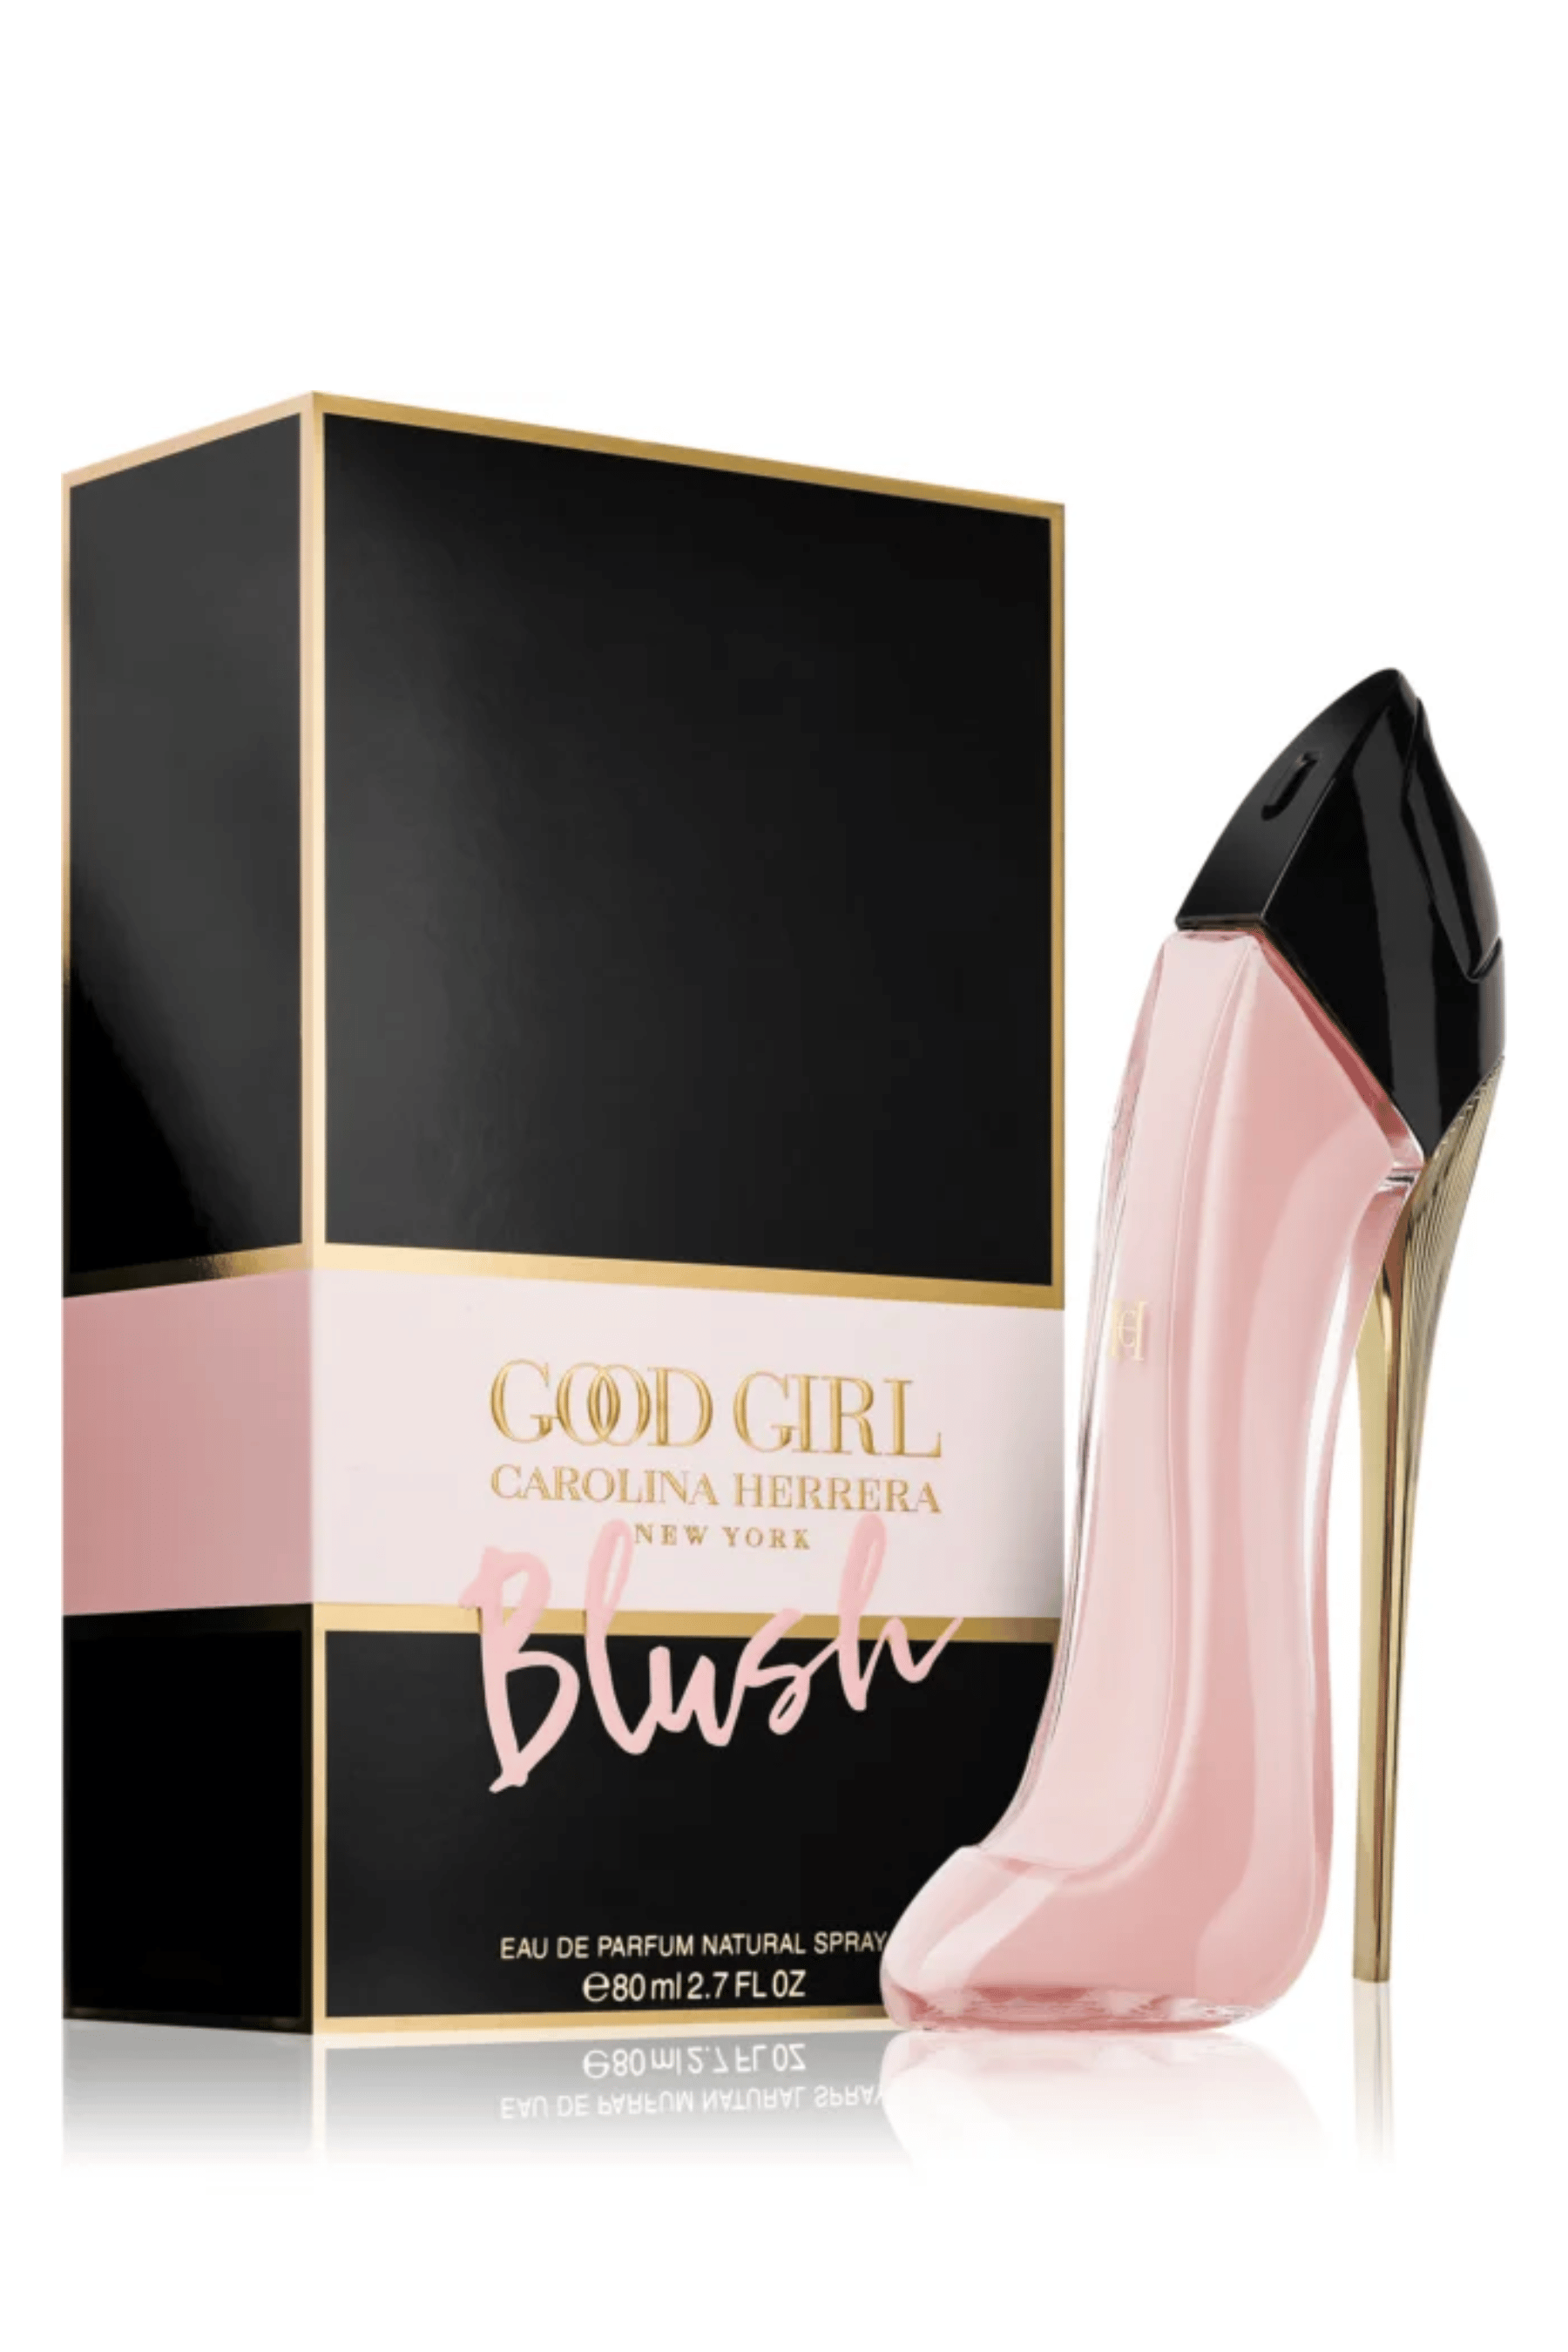 Perfume Good Girl Blush Carolina Herrera Feminino Eau de Parfum